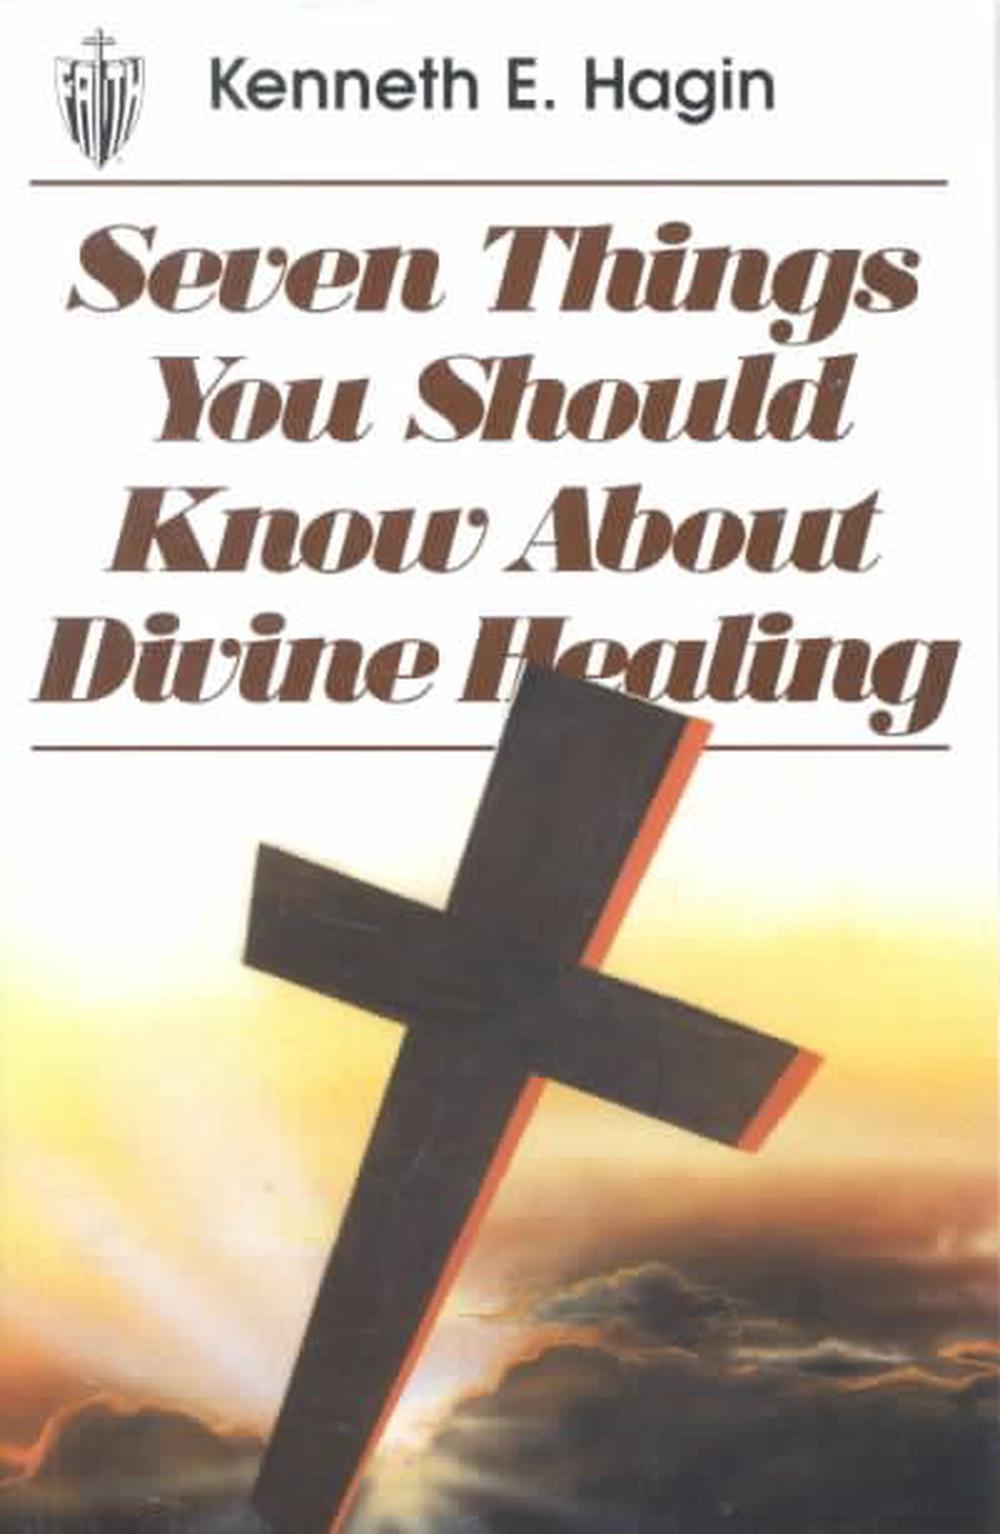 kenneth hagin healing pamphlets